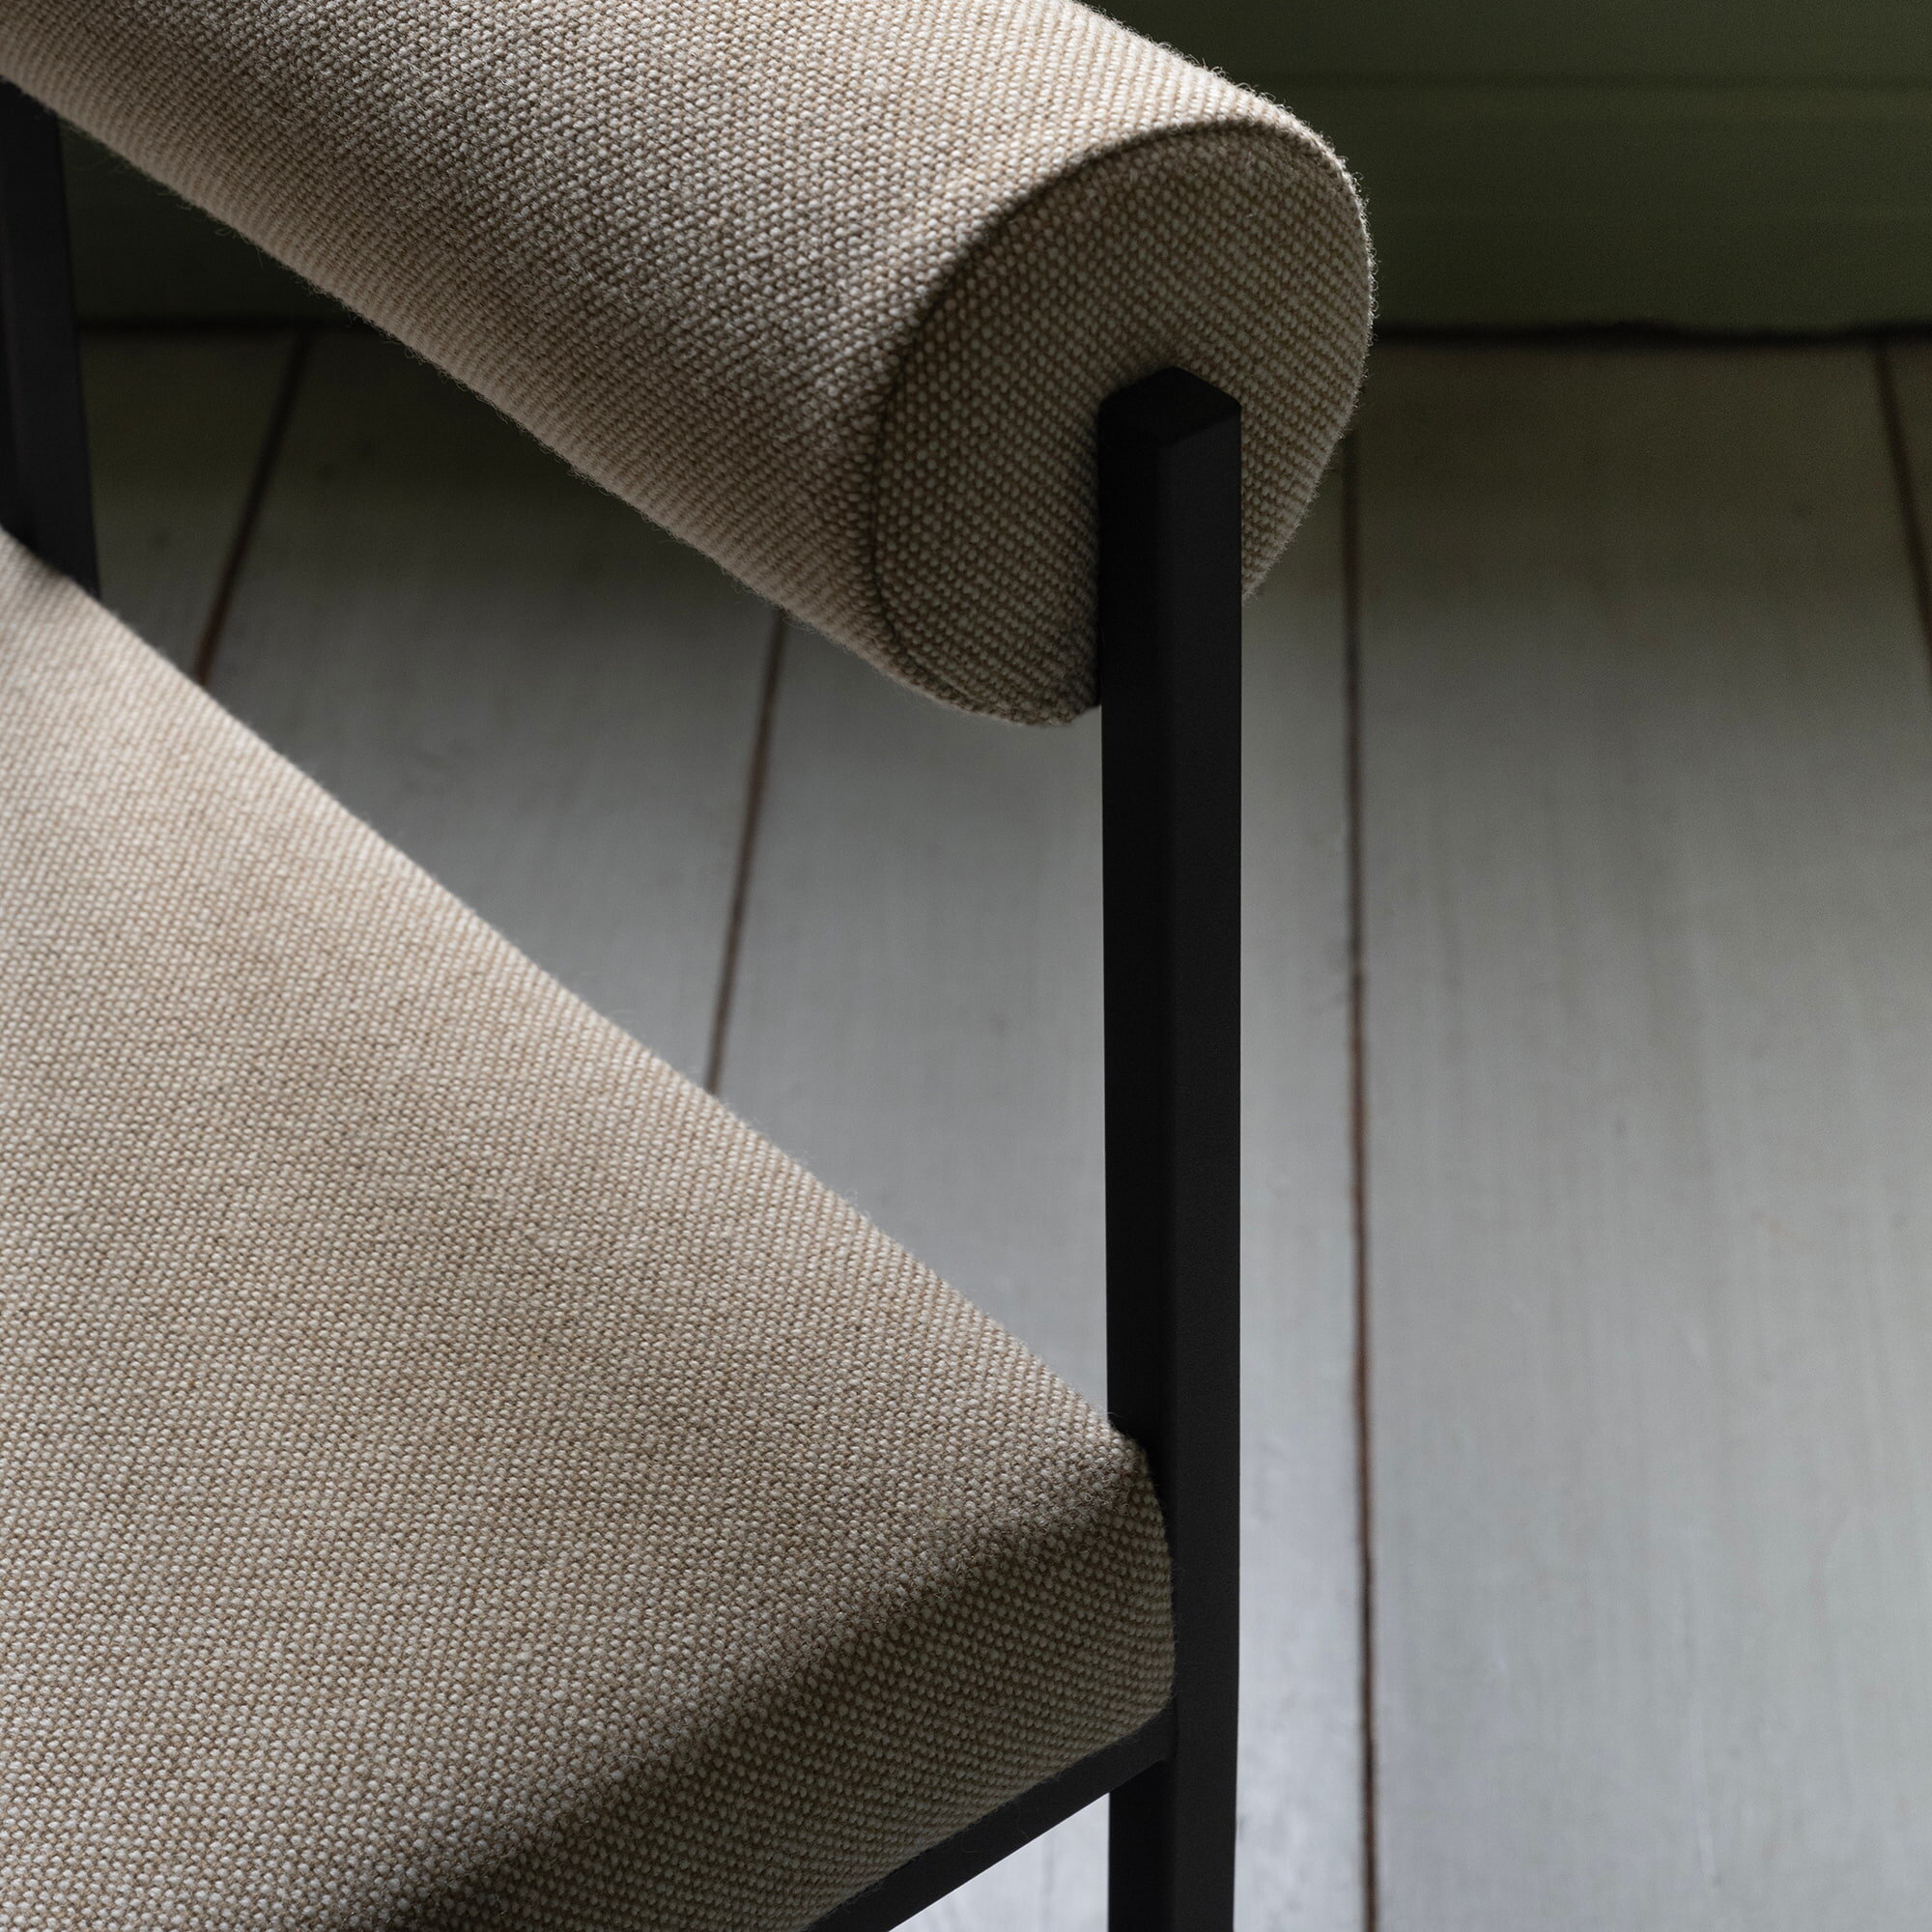 Design modern dining chair | Bolster Dining Chair without armrest Green hemp acre19 | Studio HENK| 